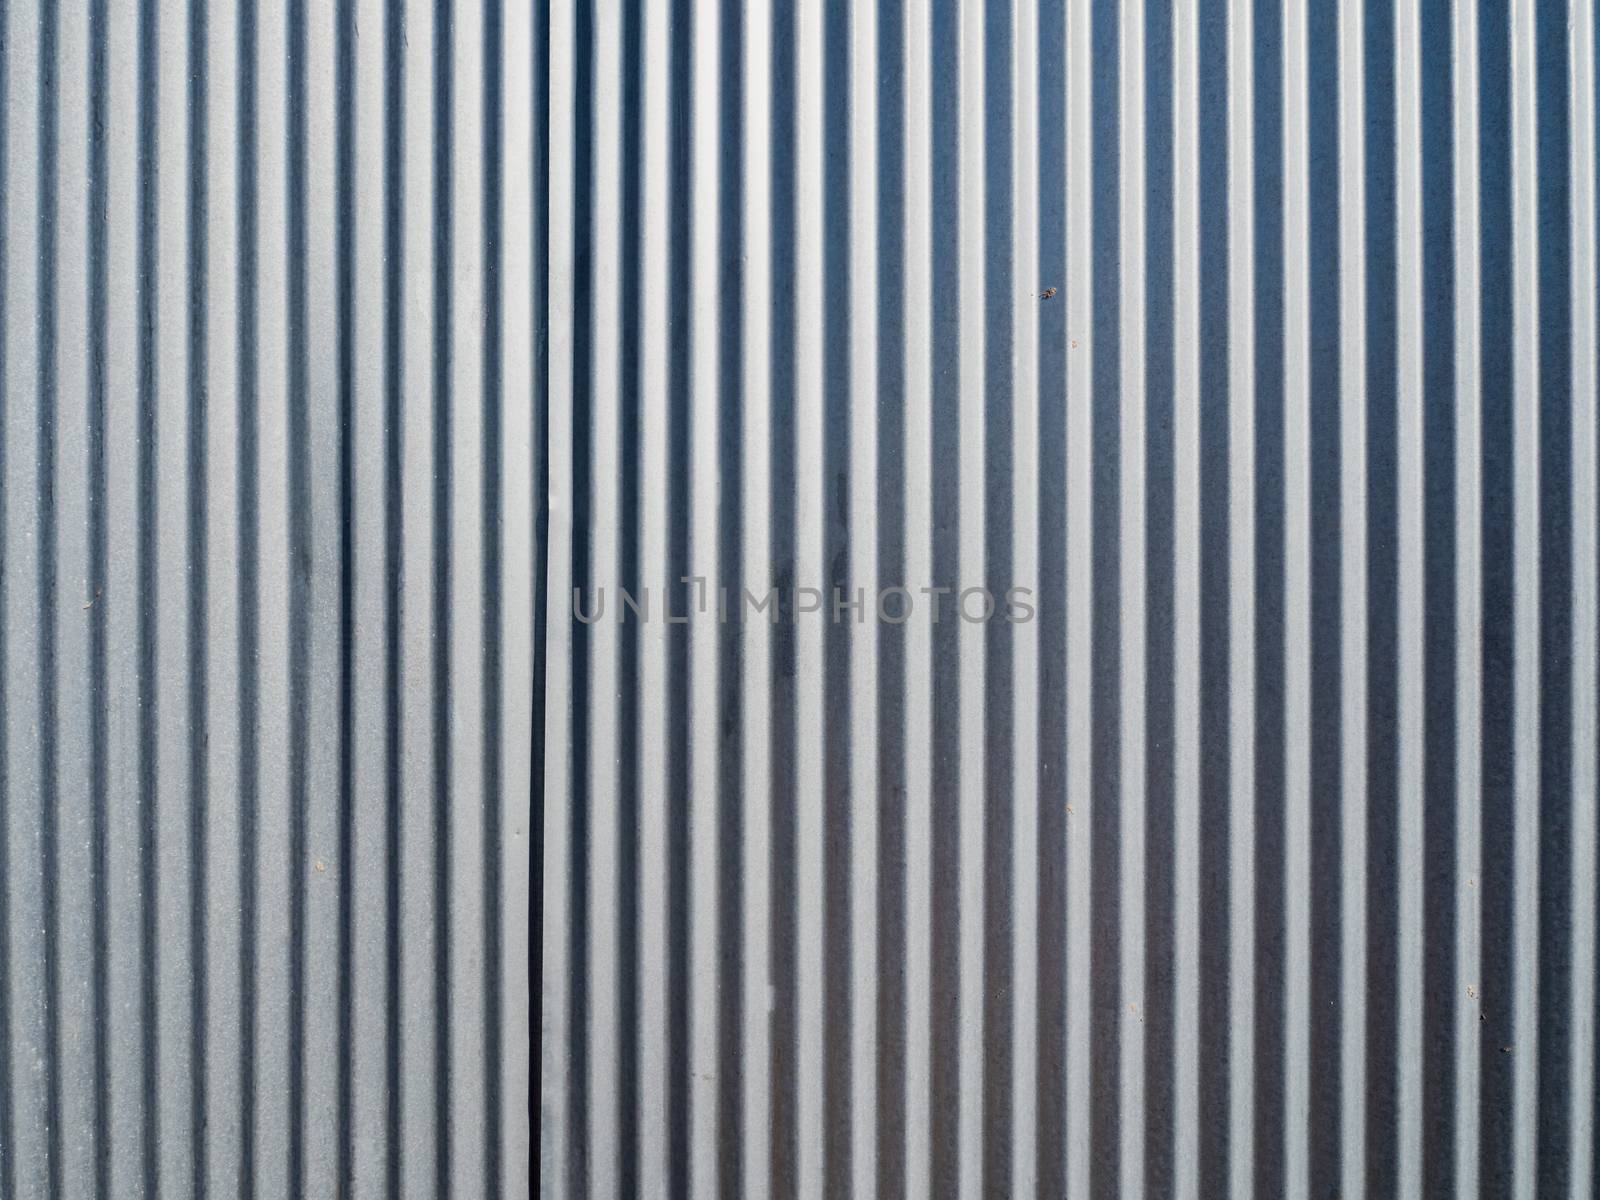 corrugated sheet metal texture background by zkruger